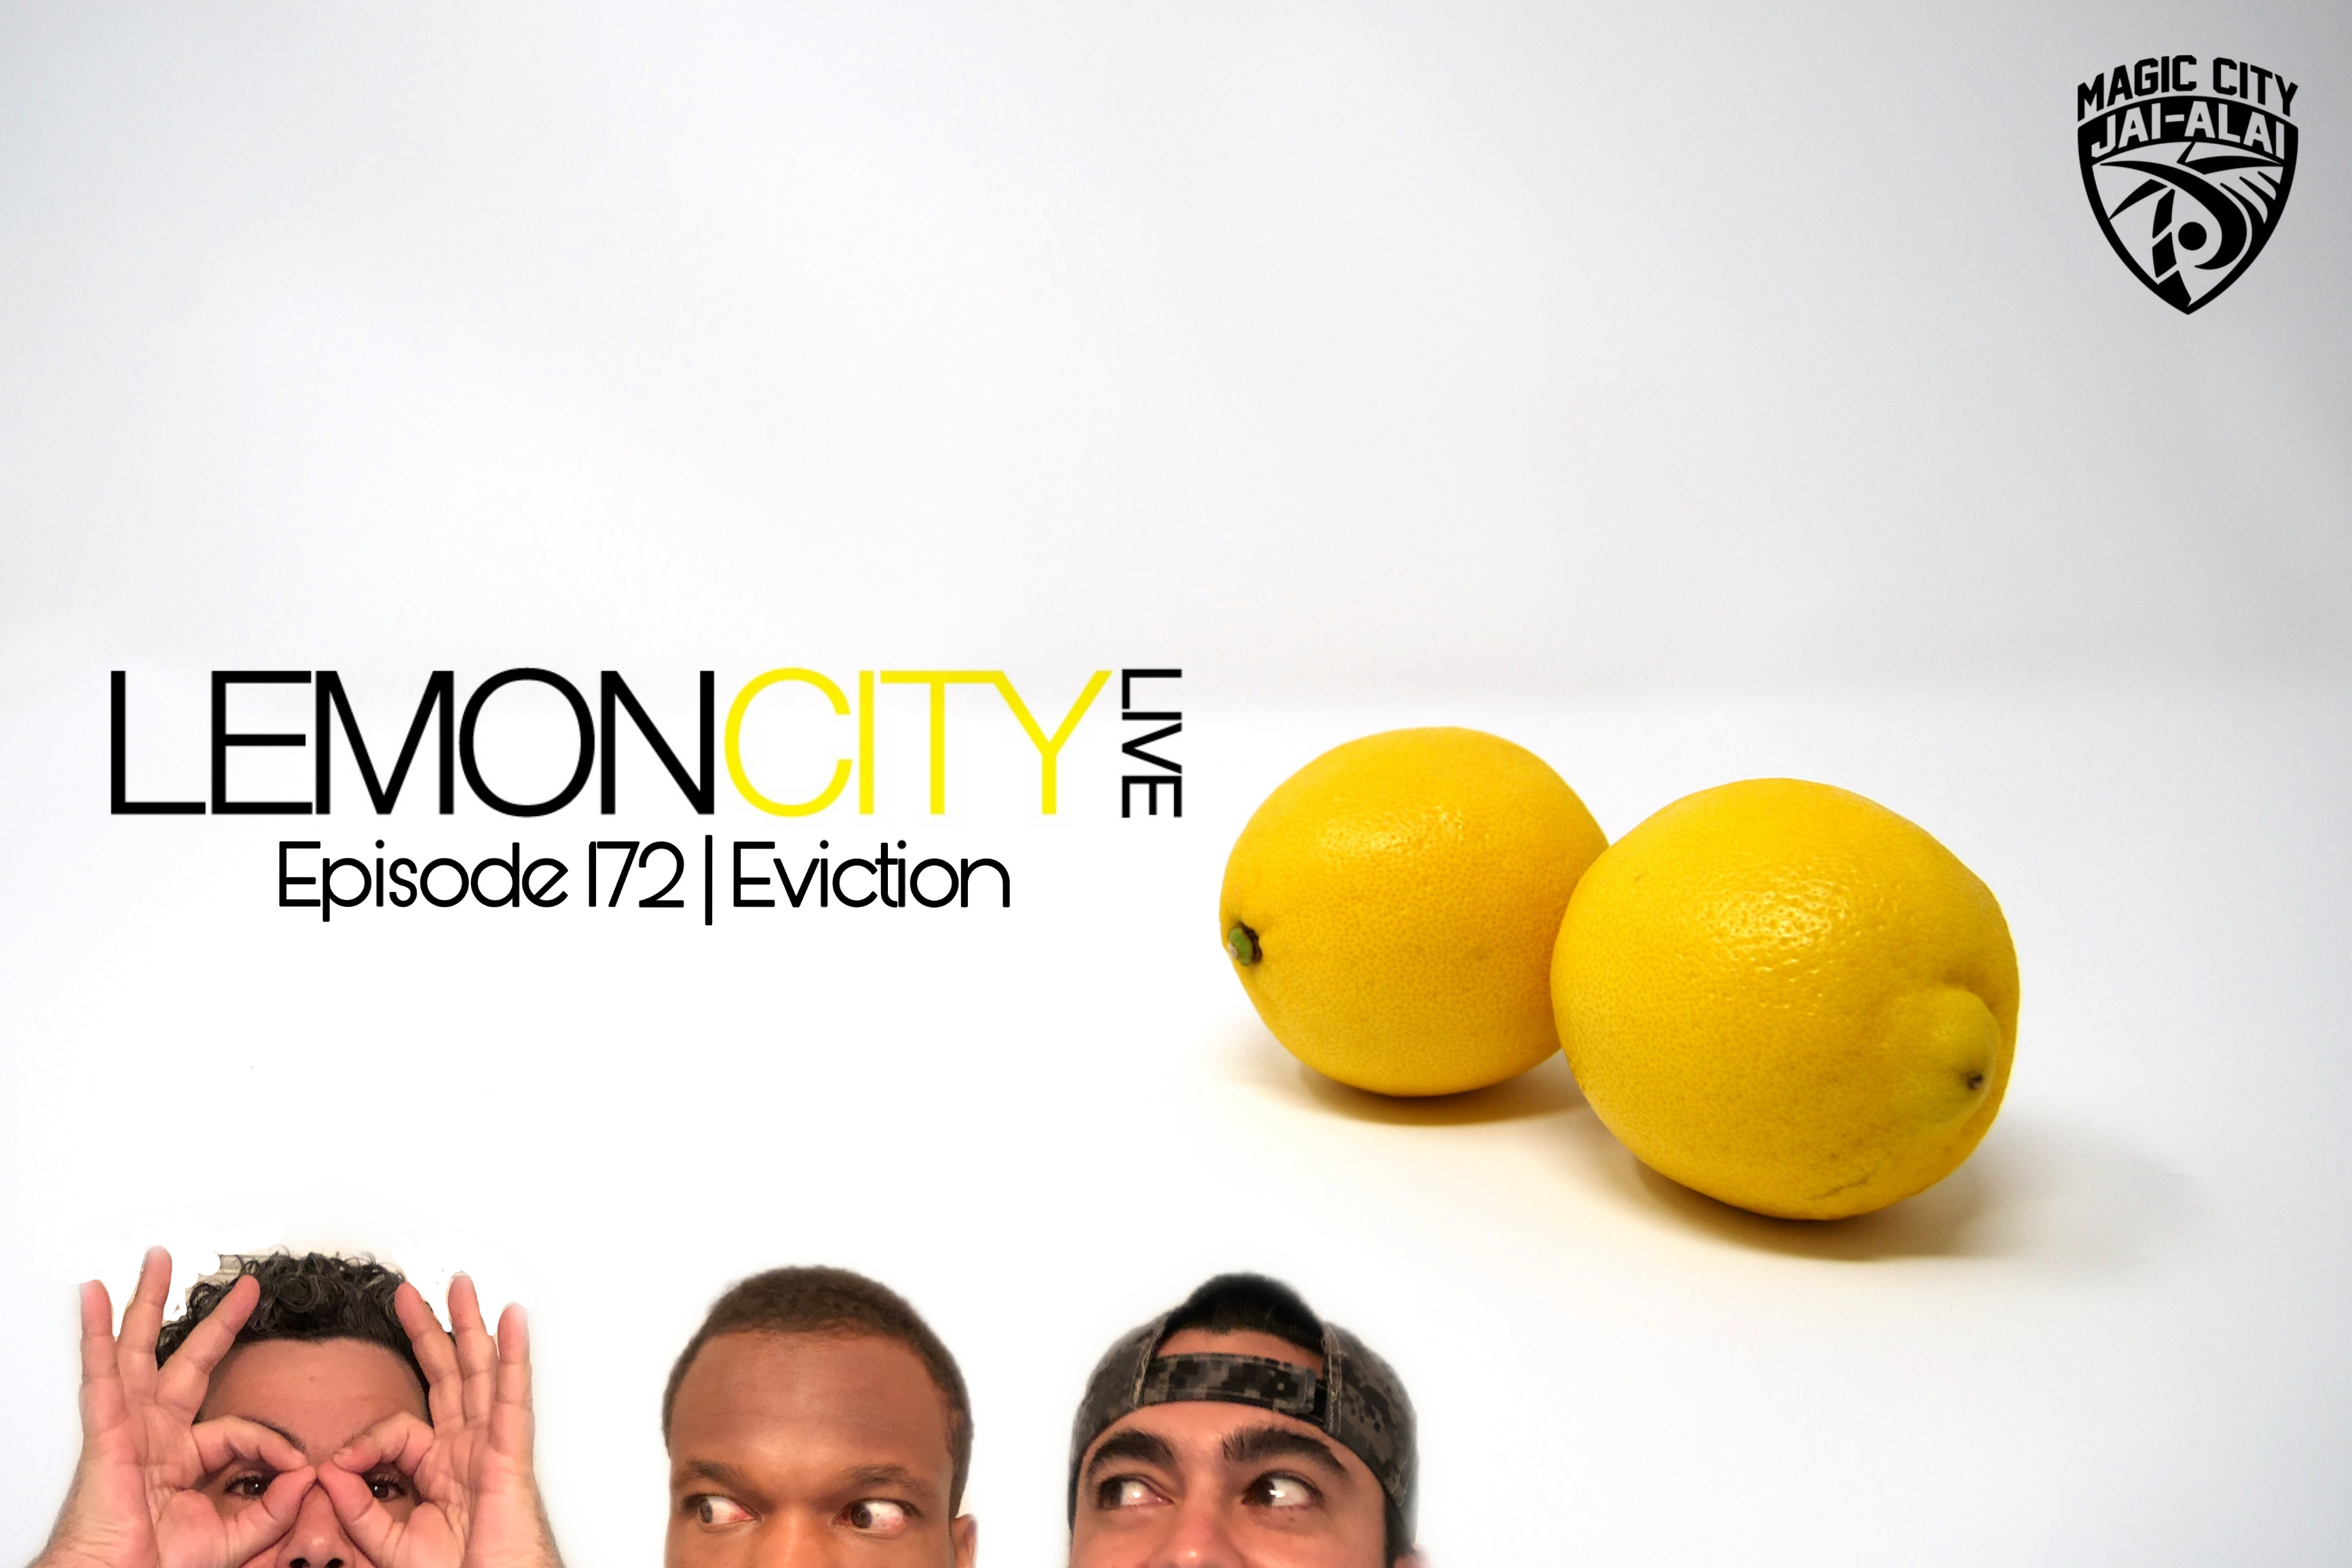 Lemon City Live